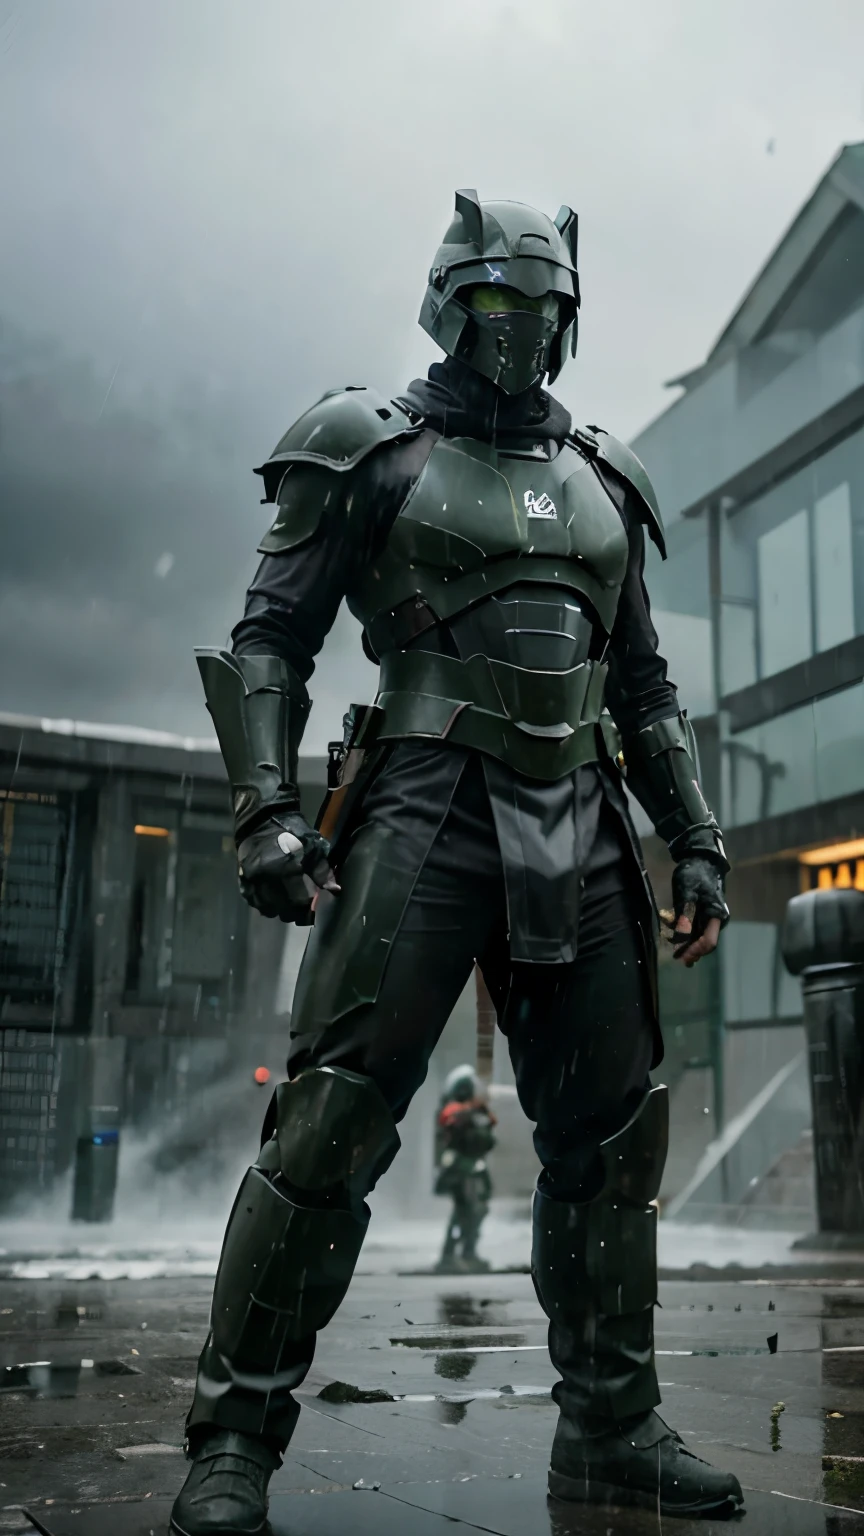 Epic futuristic spartan, standing on a battlefield, heavy rain, cinematic, masked